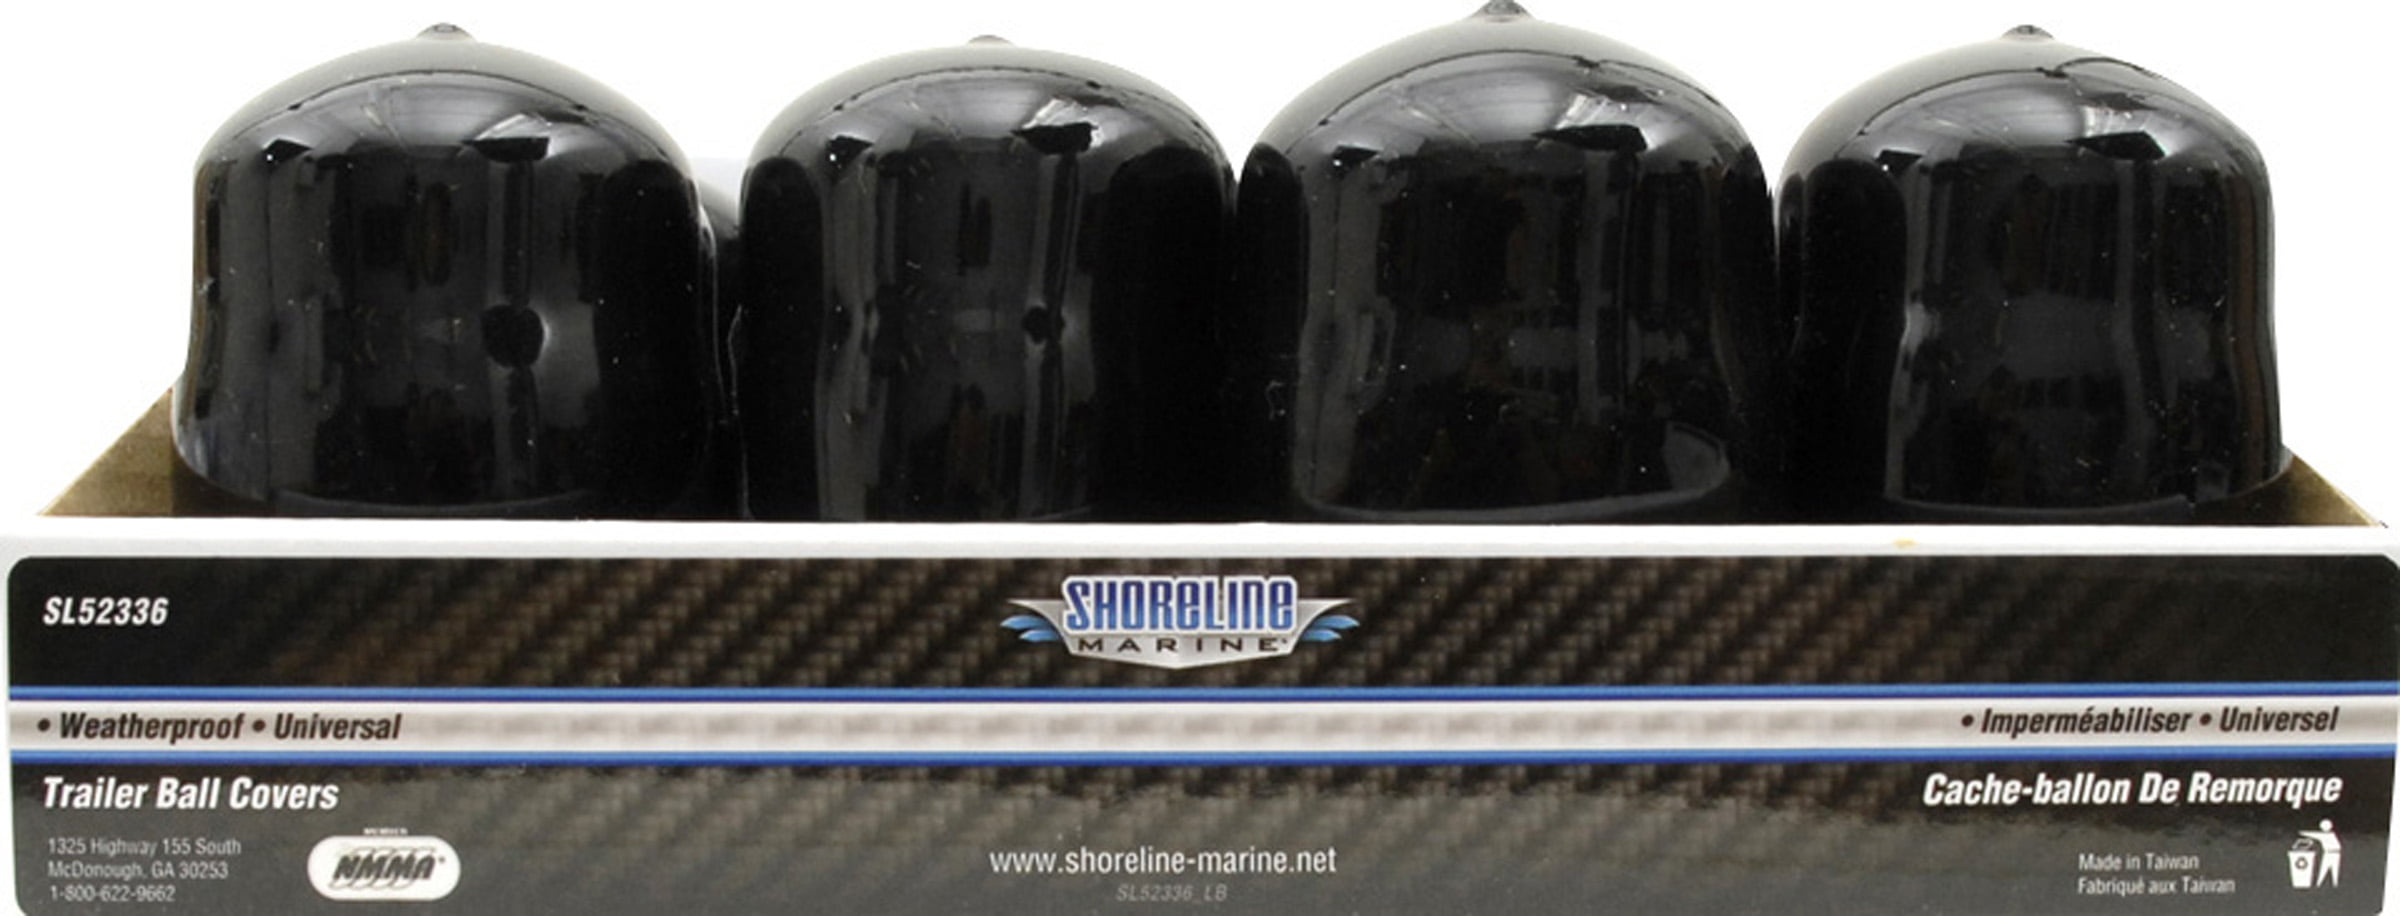 Shoreline Marine Trailer Ball Cover SL52336 Black, 1-7/8 to 2-inch